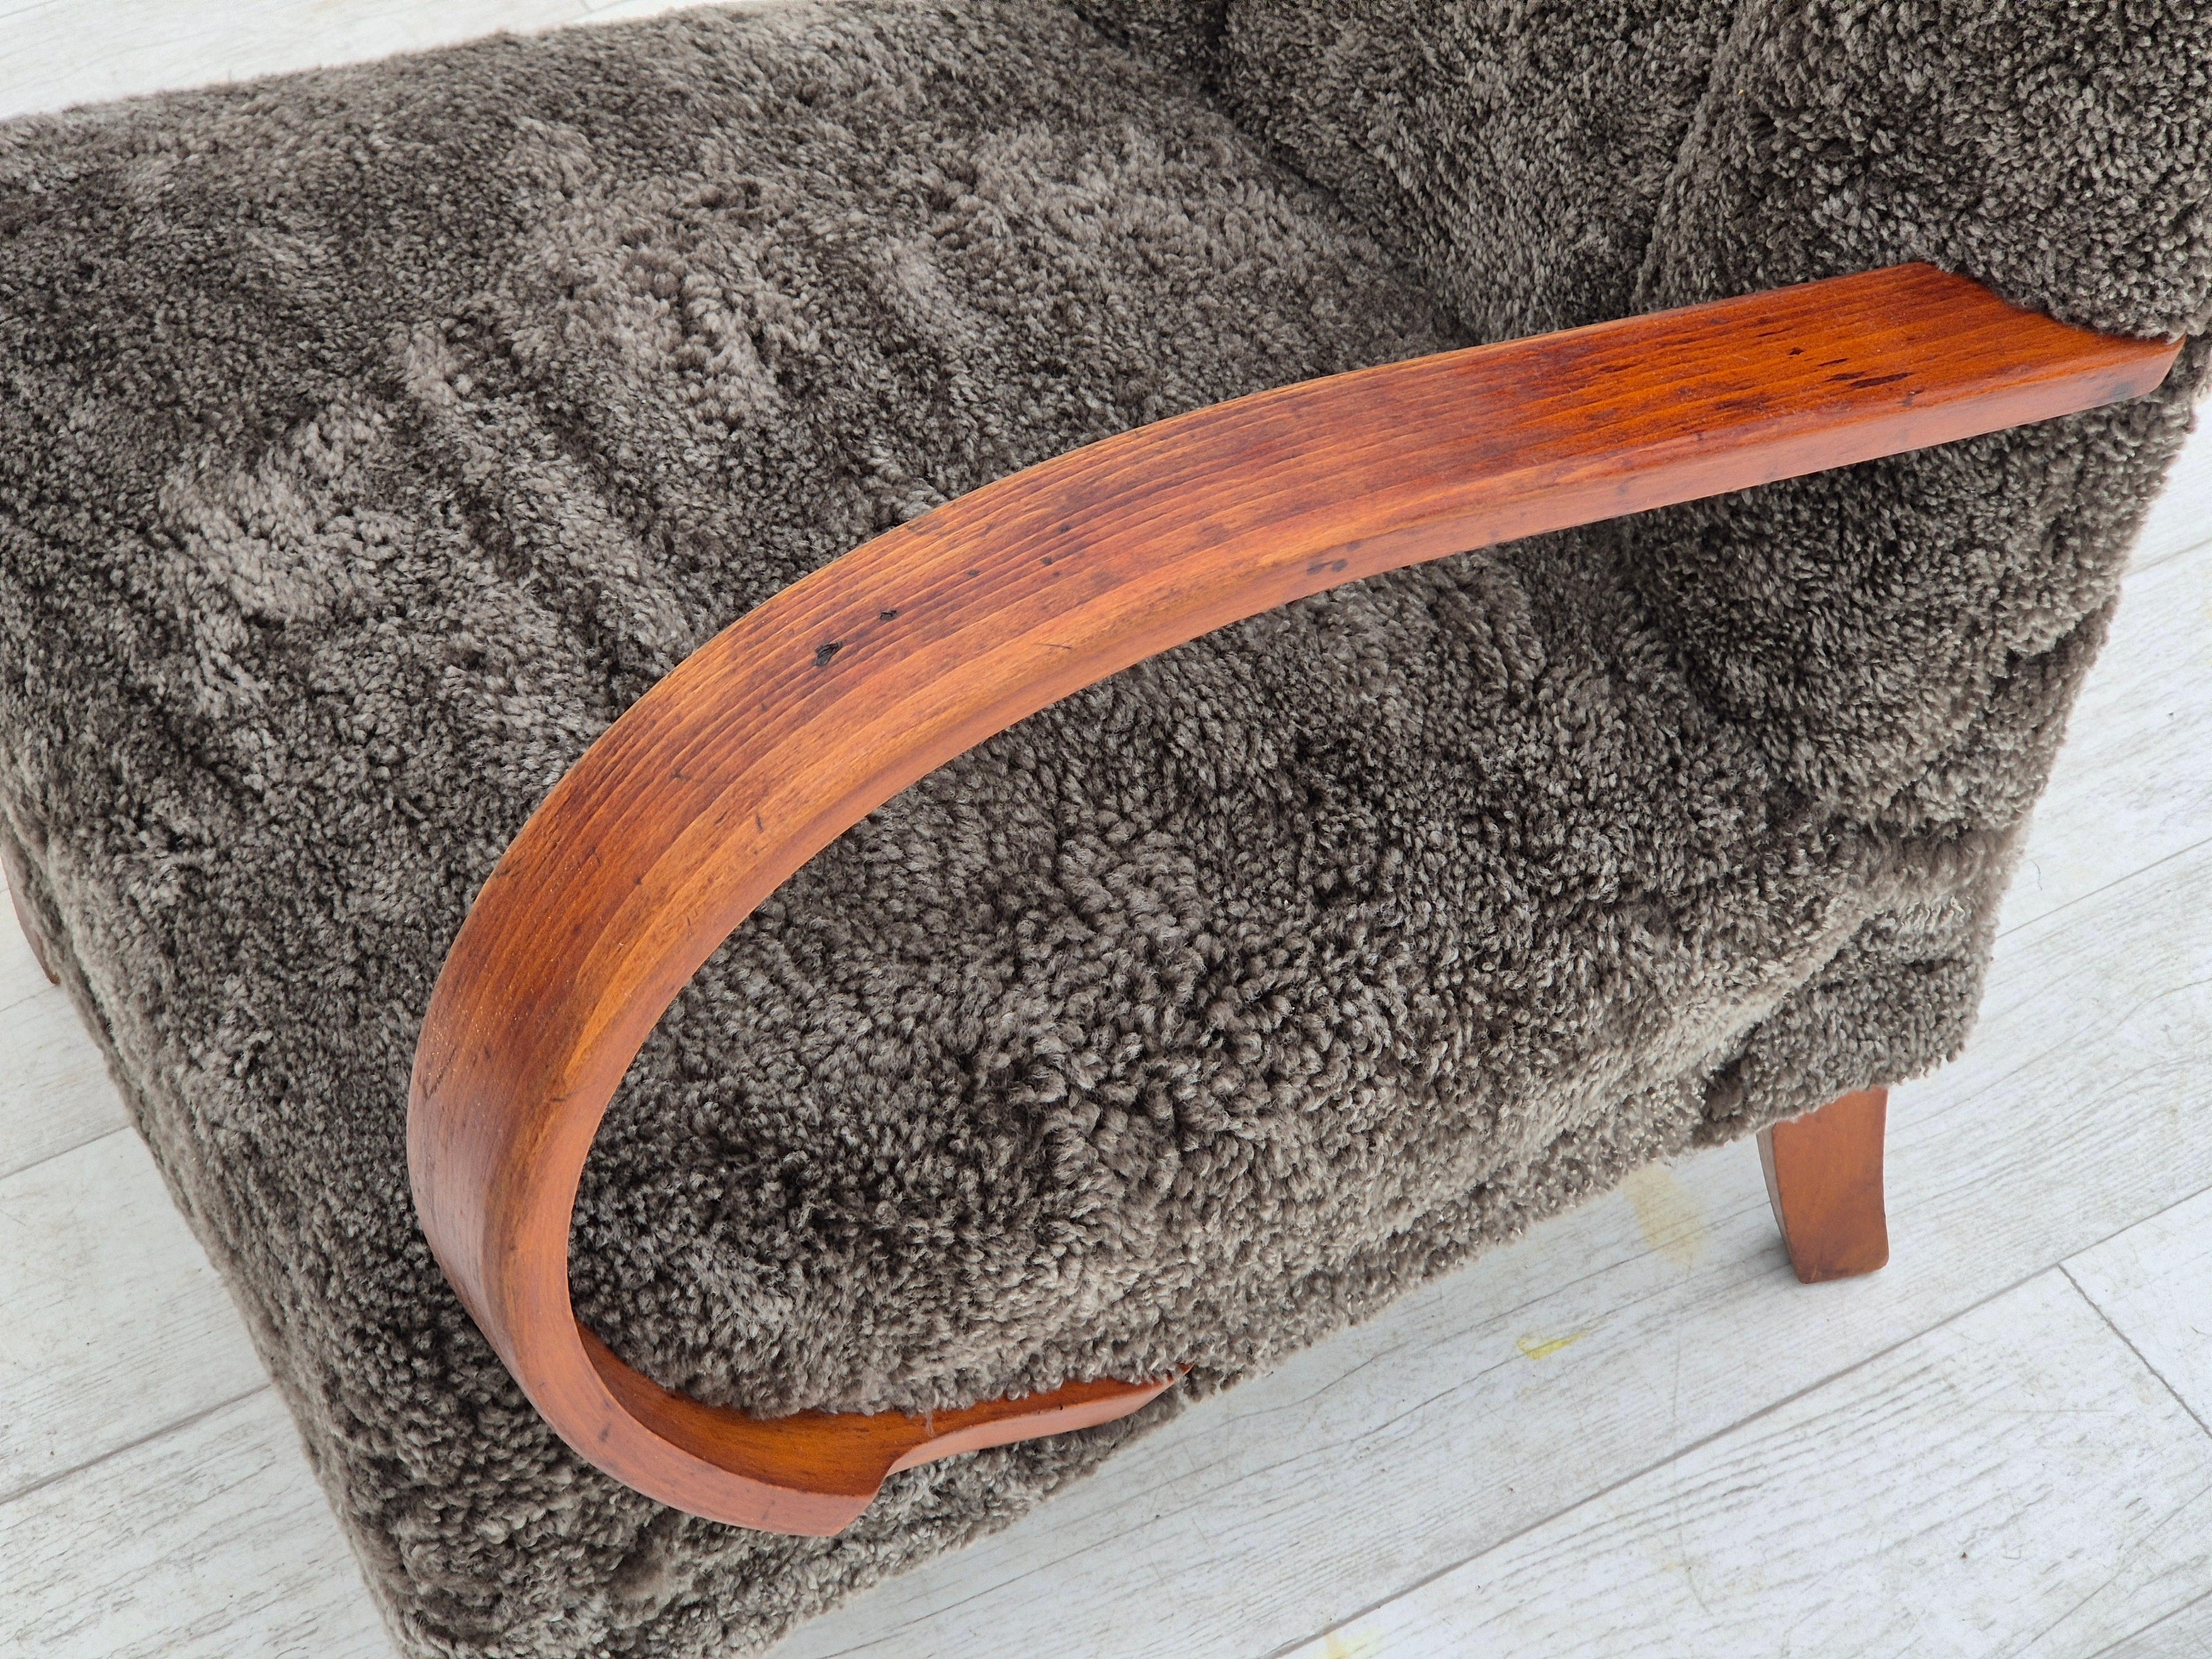 1950s, Danish design, refurbished armchair, geniue sheepskin 